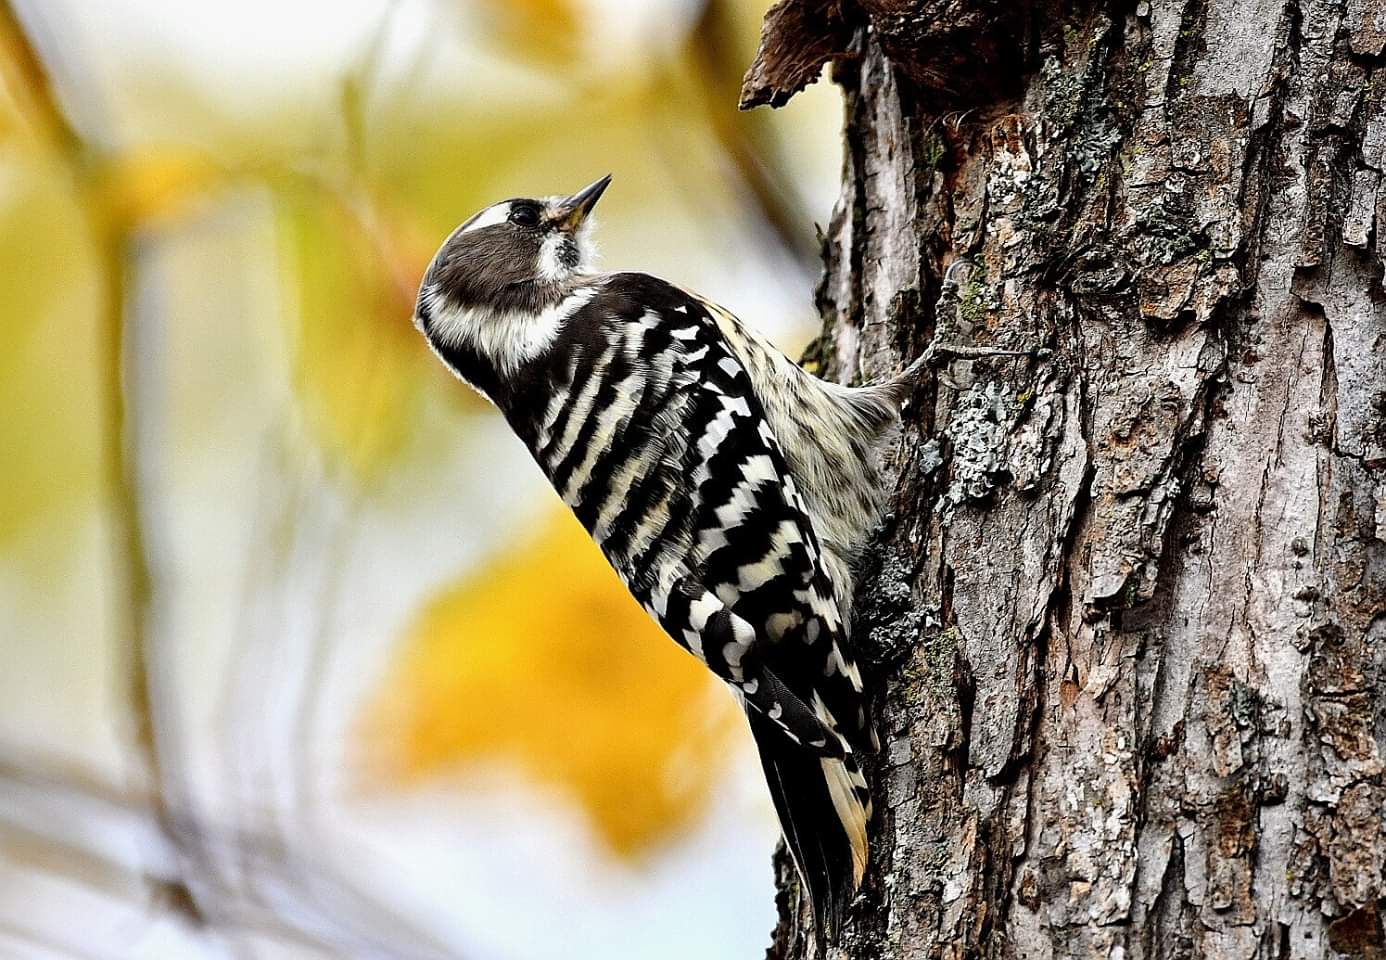 Japanese Pygmy Woodpecker